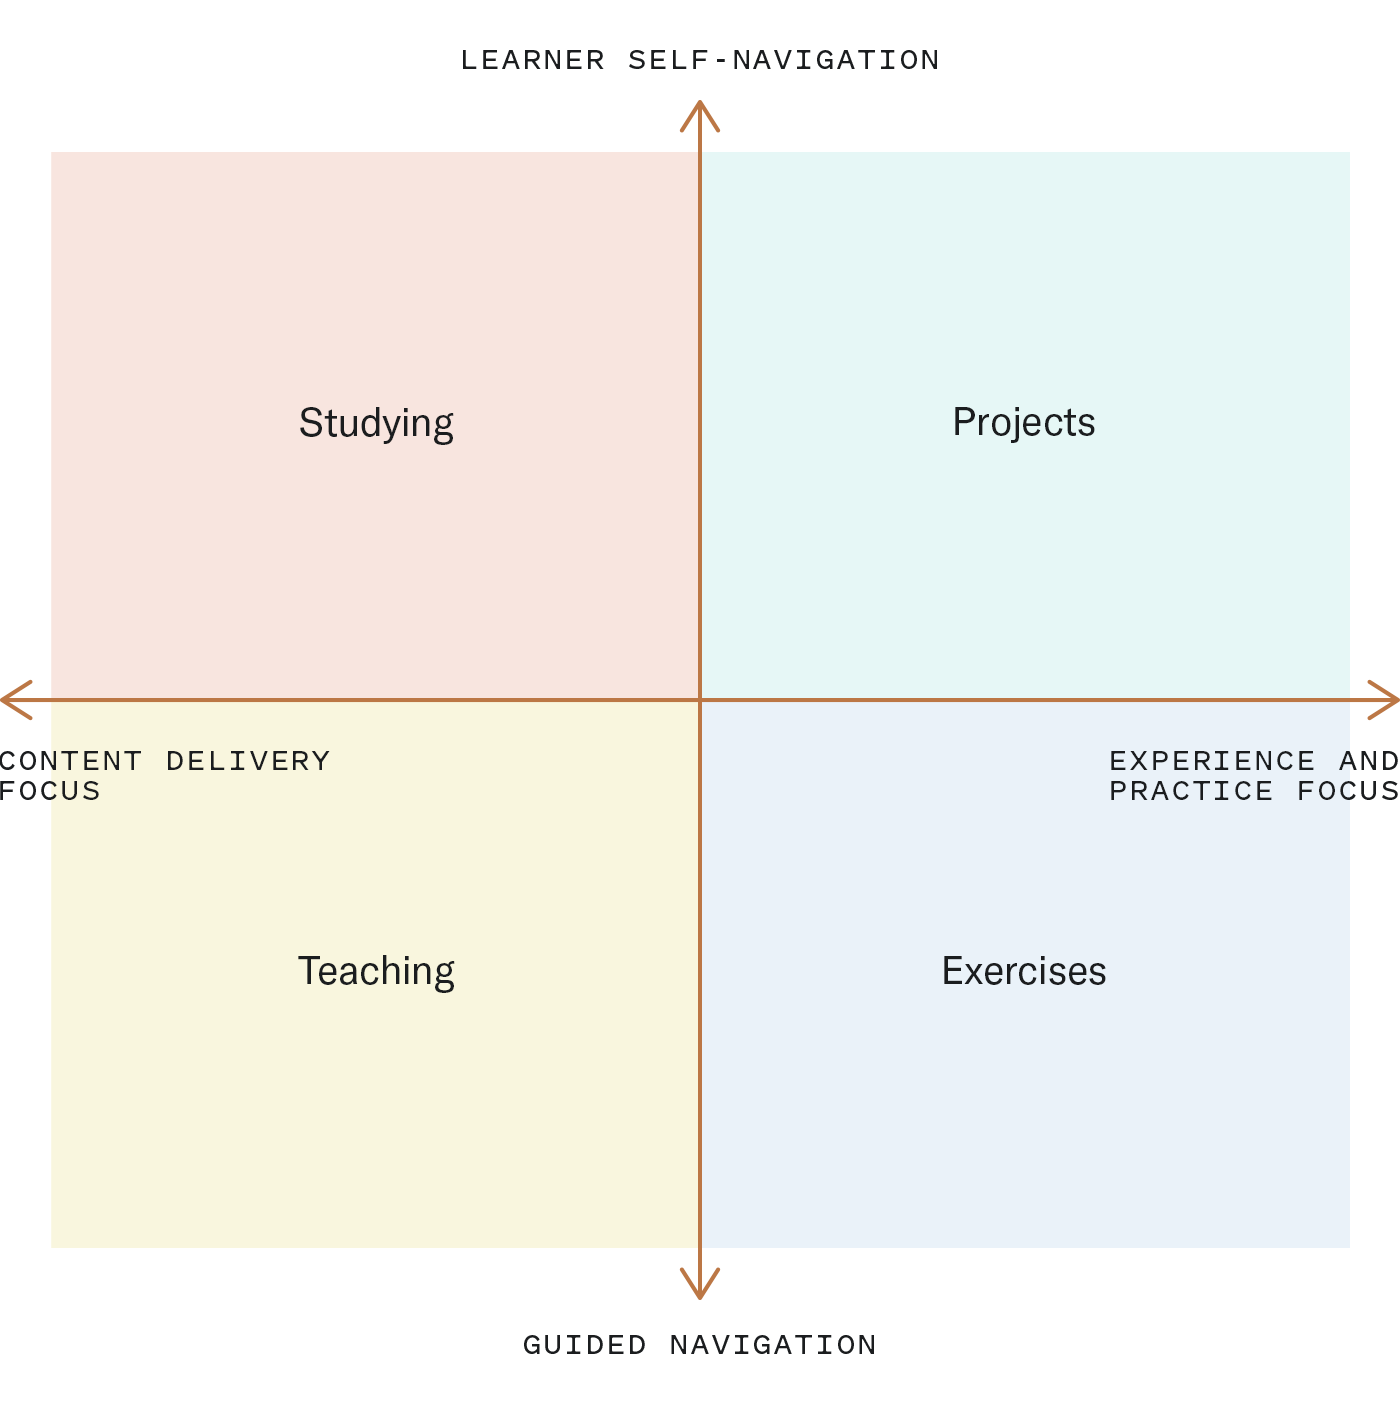 vILT training can be designed using the learning ecology matrix